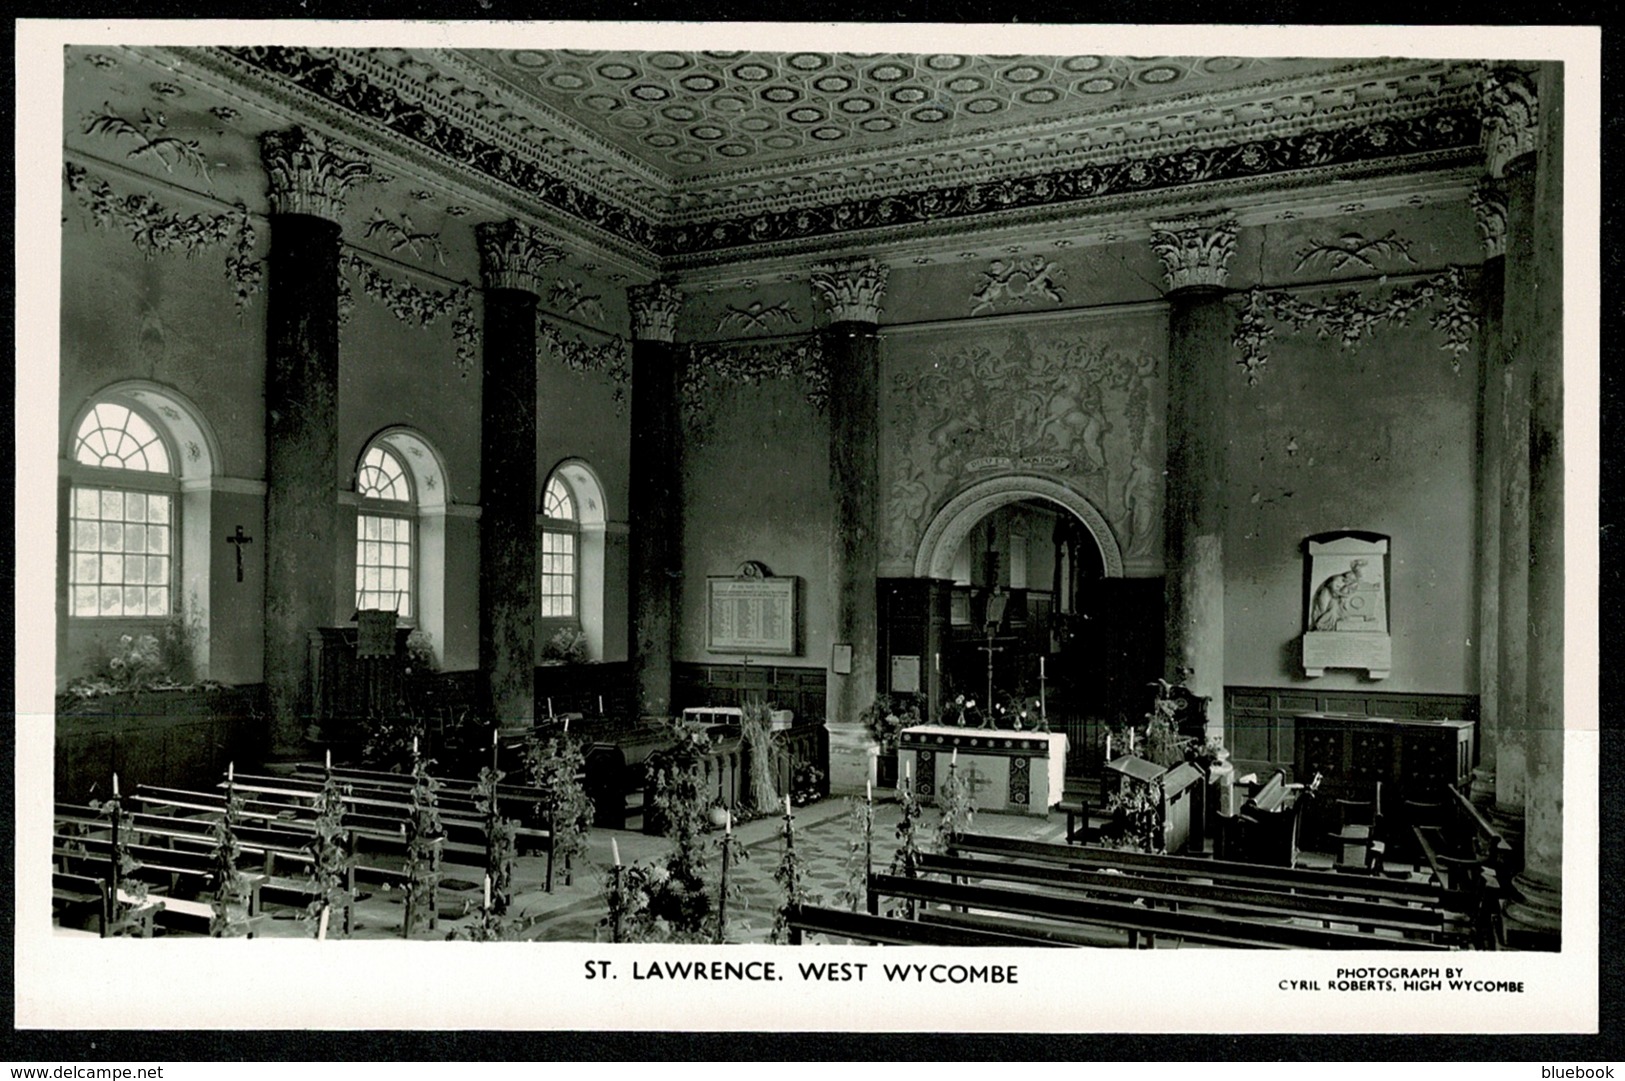 Ref 1262 - Real Photo Postcard - St Lawrence Church Interior - West Wycombe Buckinghamshire - Buckinghamshire